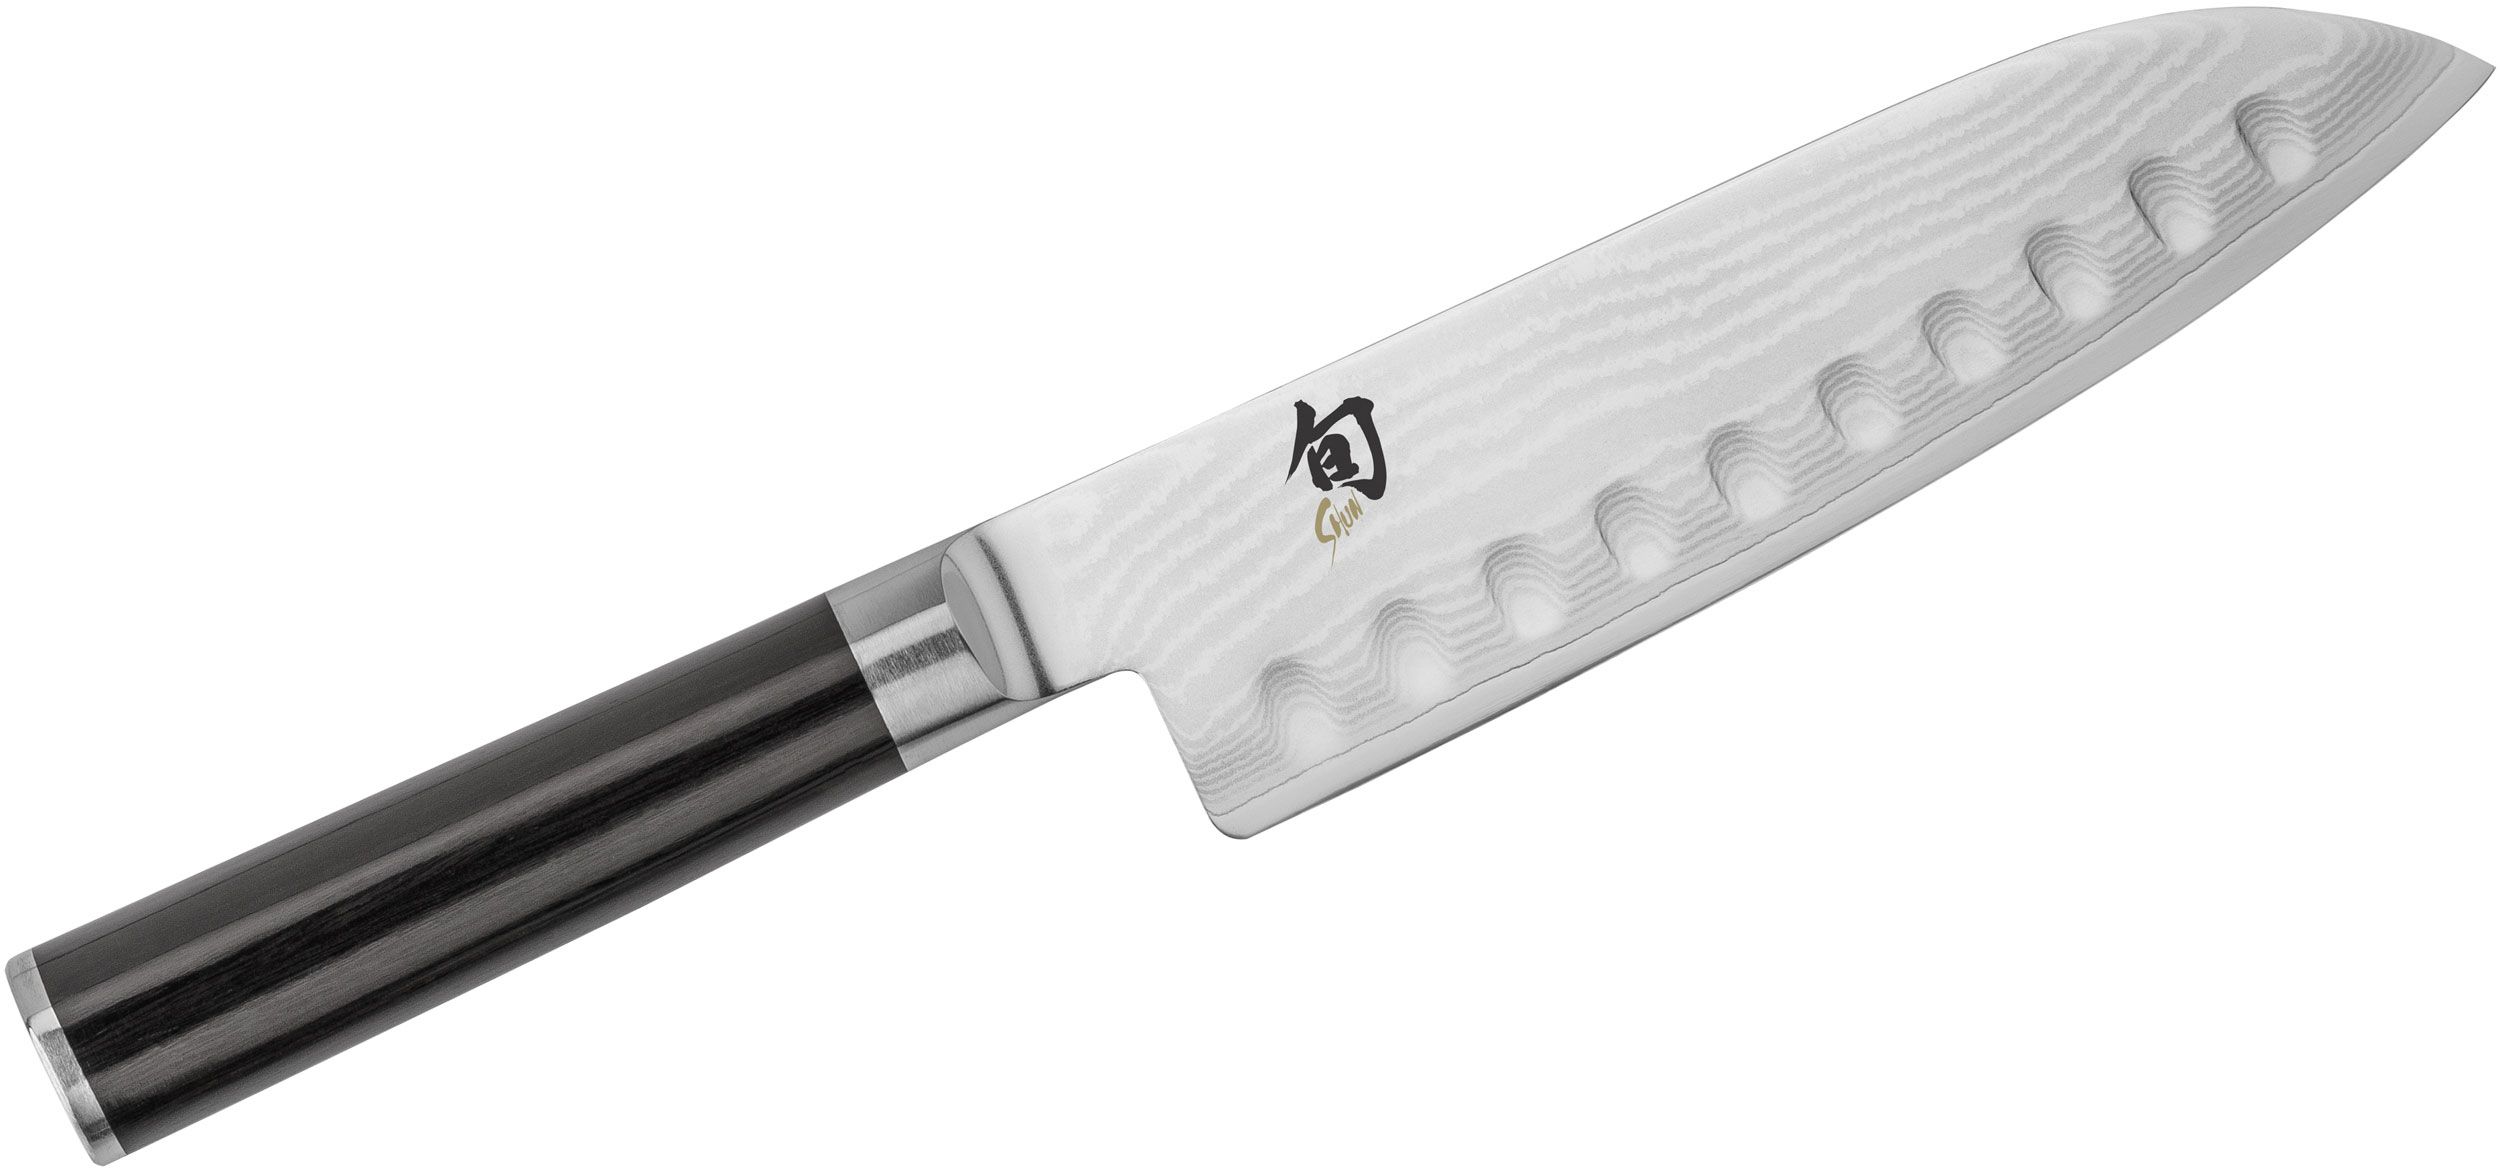 Shun DM0718 Classic Hollow Ground Santoku Knife 7 inch Blade, Pakkawood  Handle